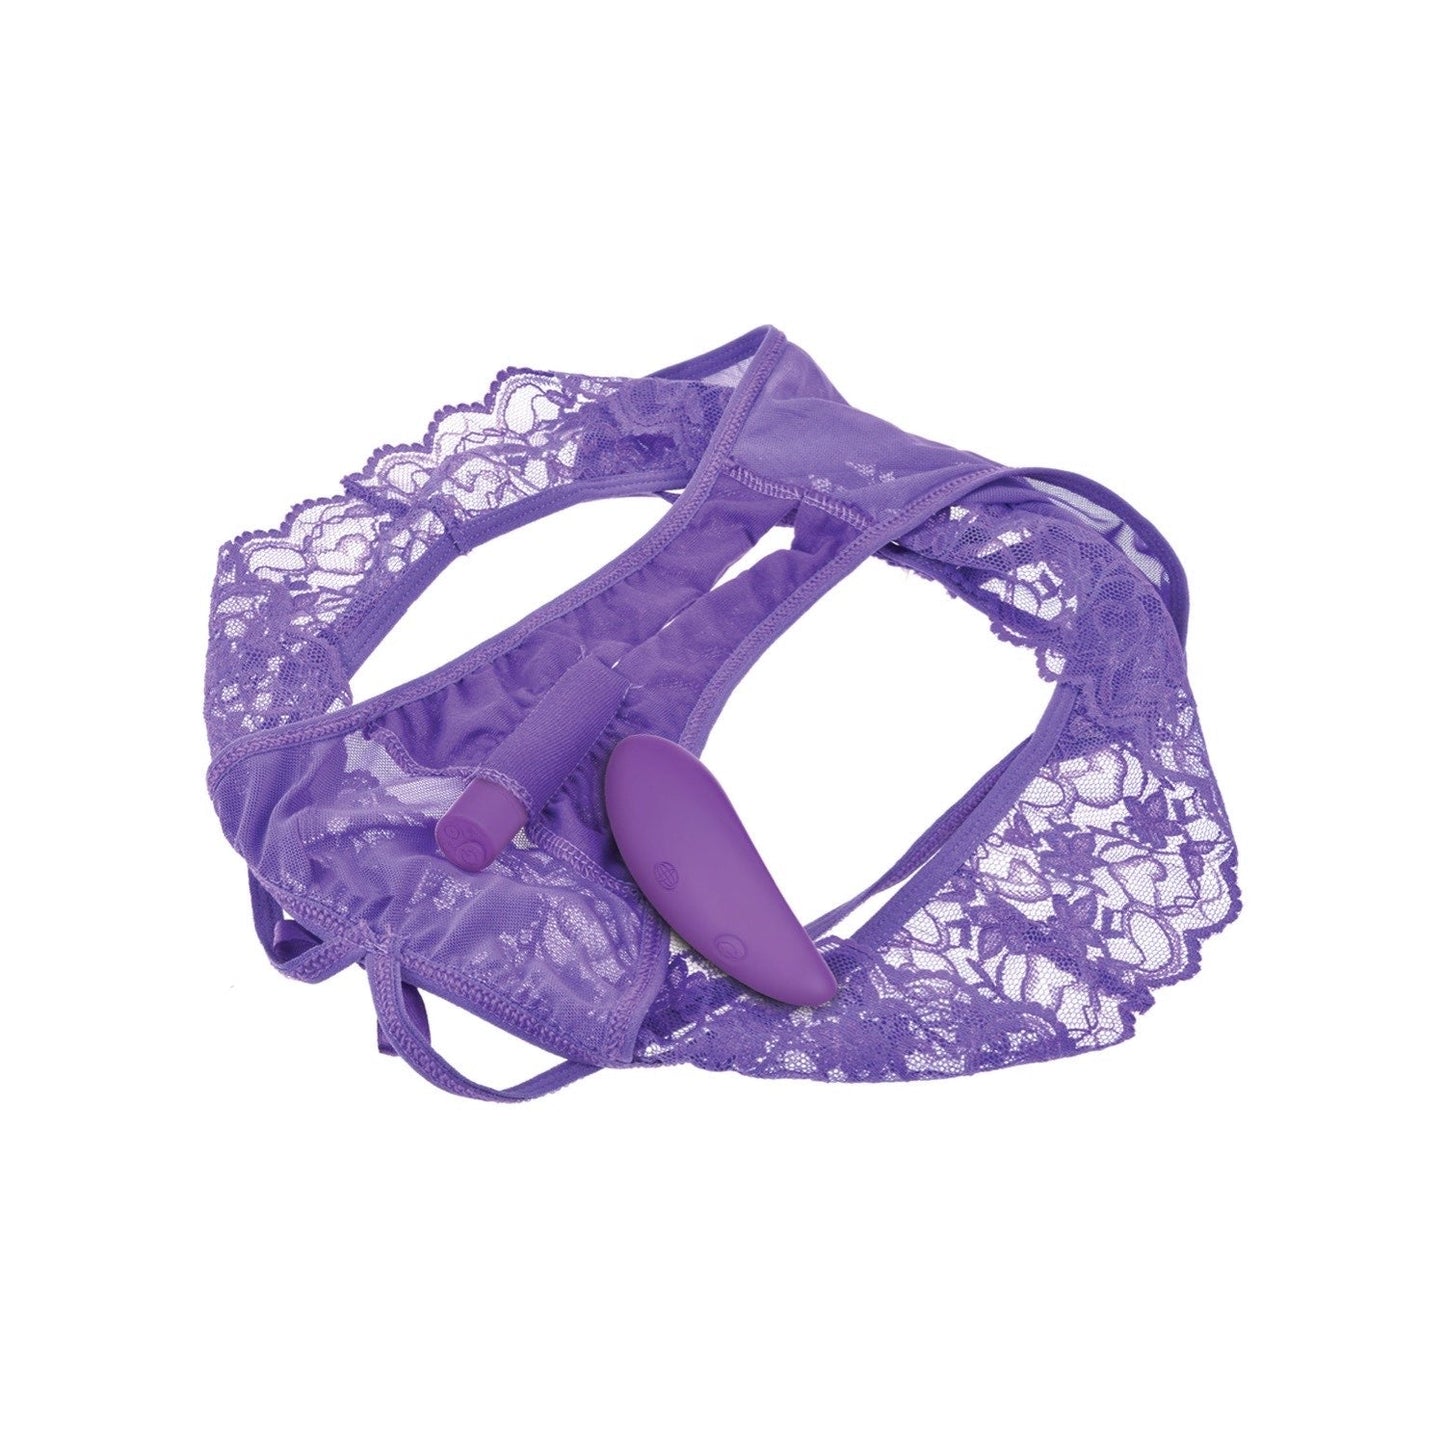 Thrill-Her 无裆内裤 - 带无线遥控的紫色振动内裤